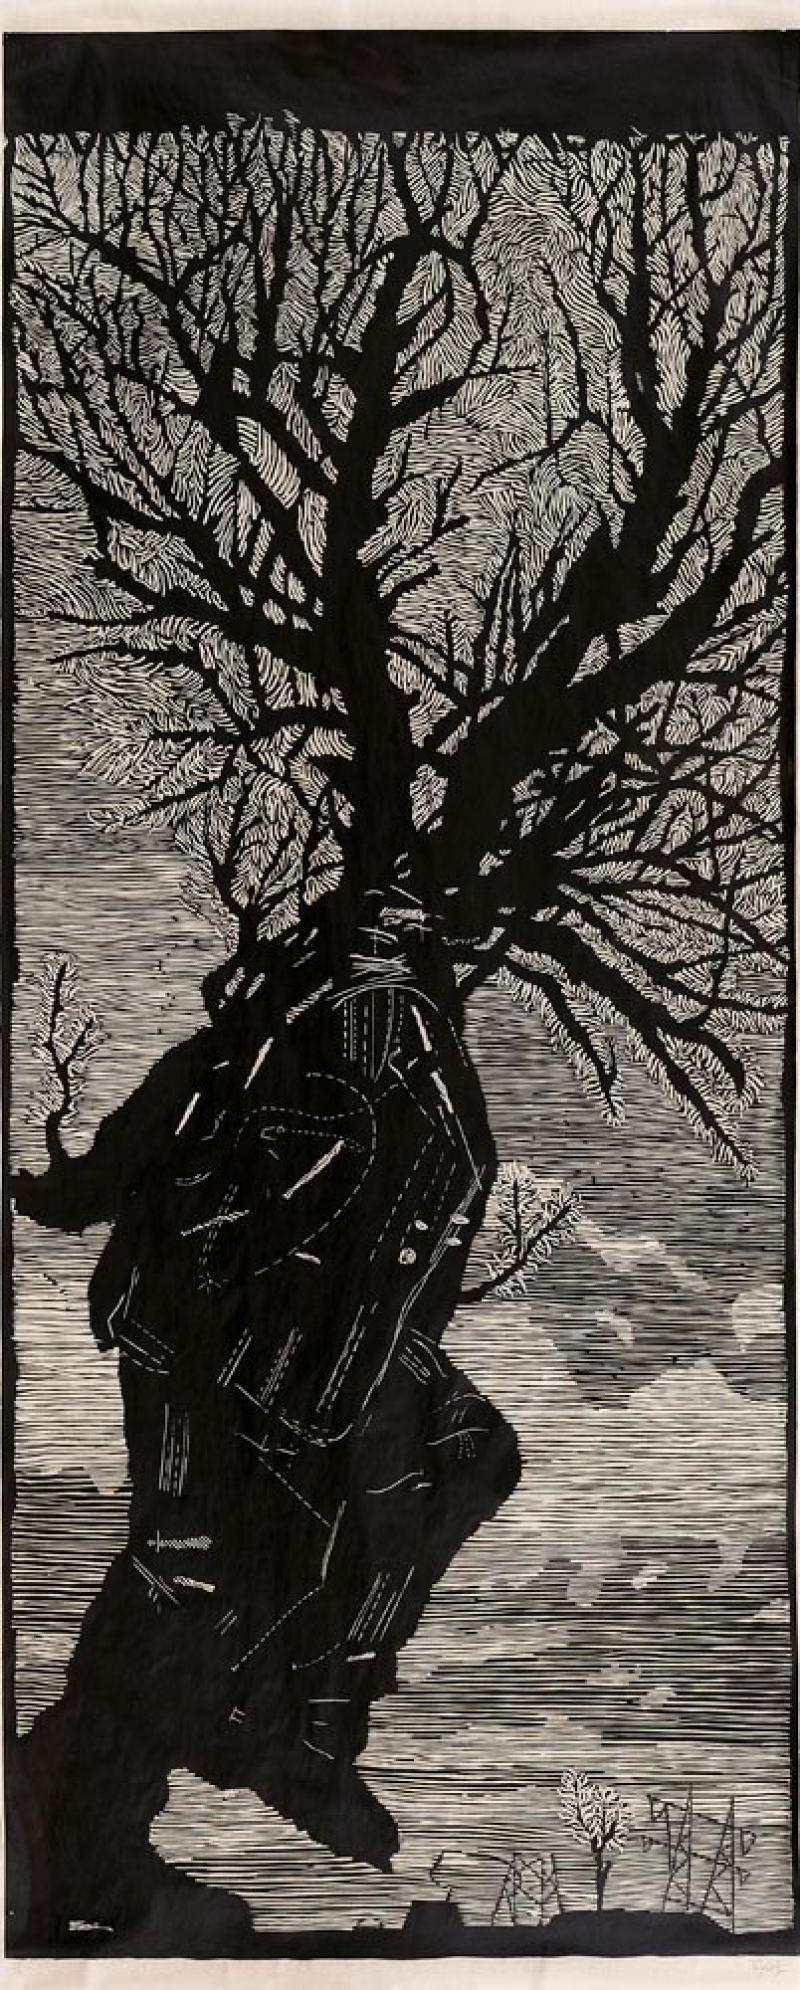 William Kentridge - Man Turning into a Tree